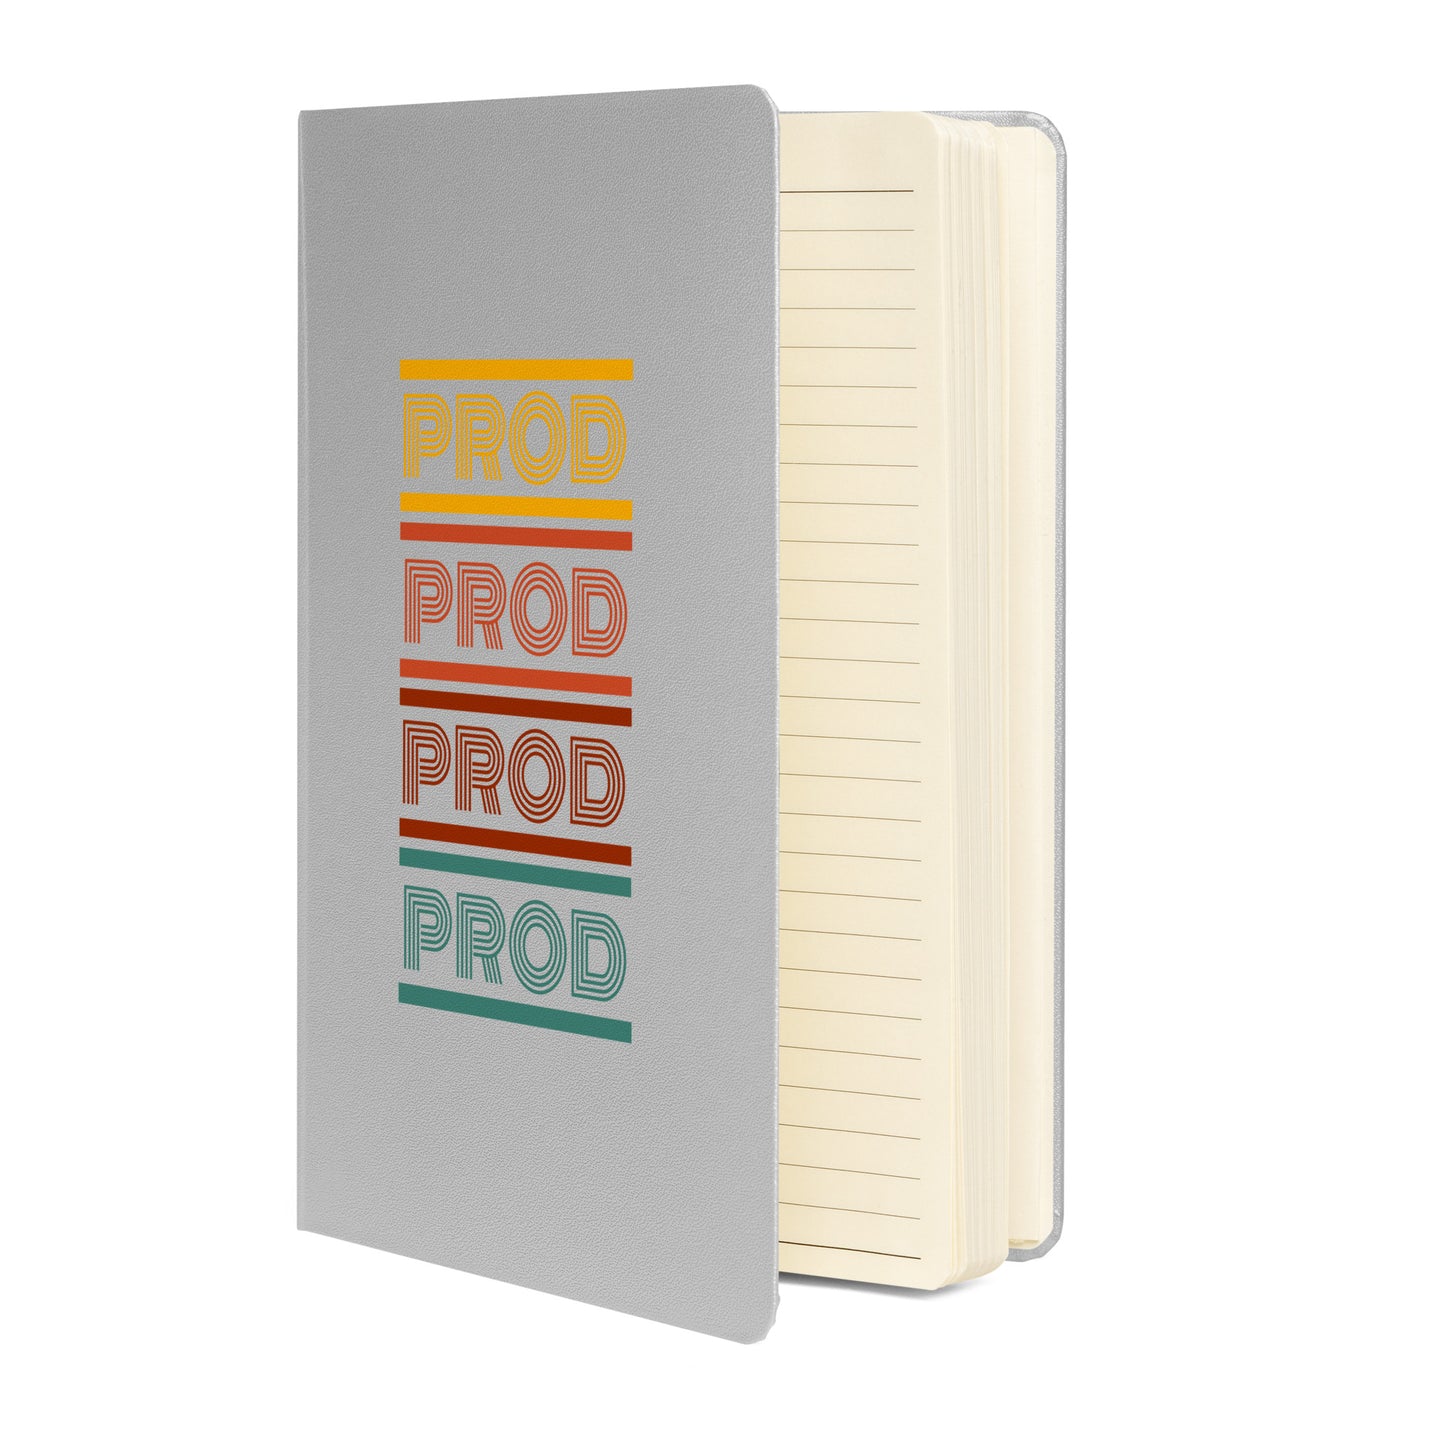 Hardcover bound notebook Production Retro Series - CineQuips